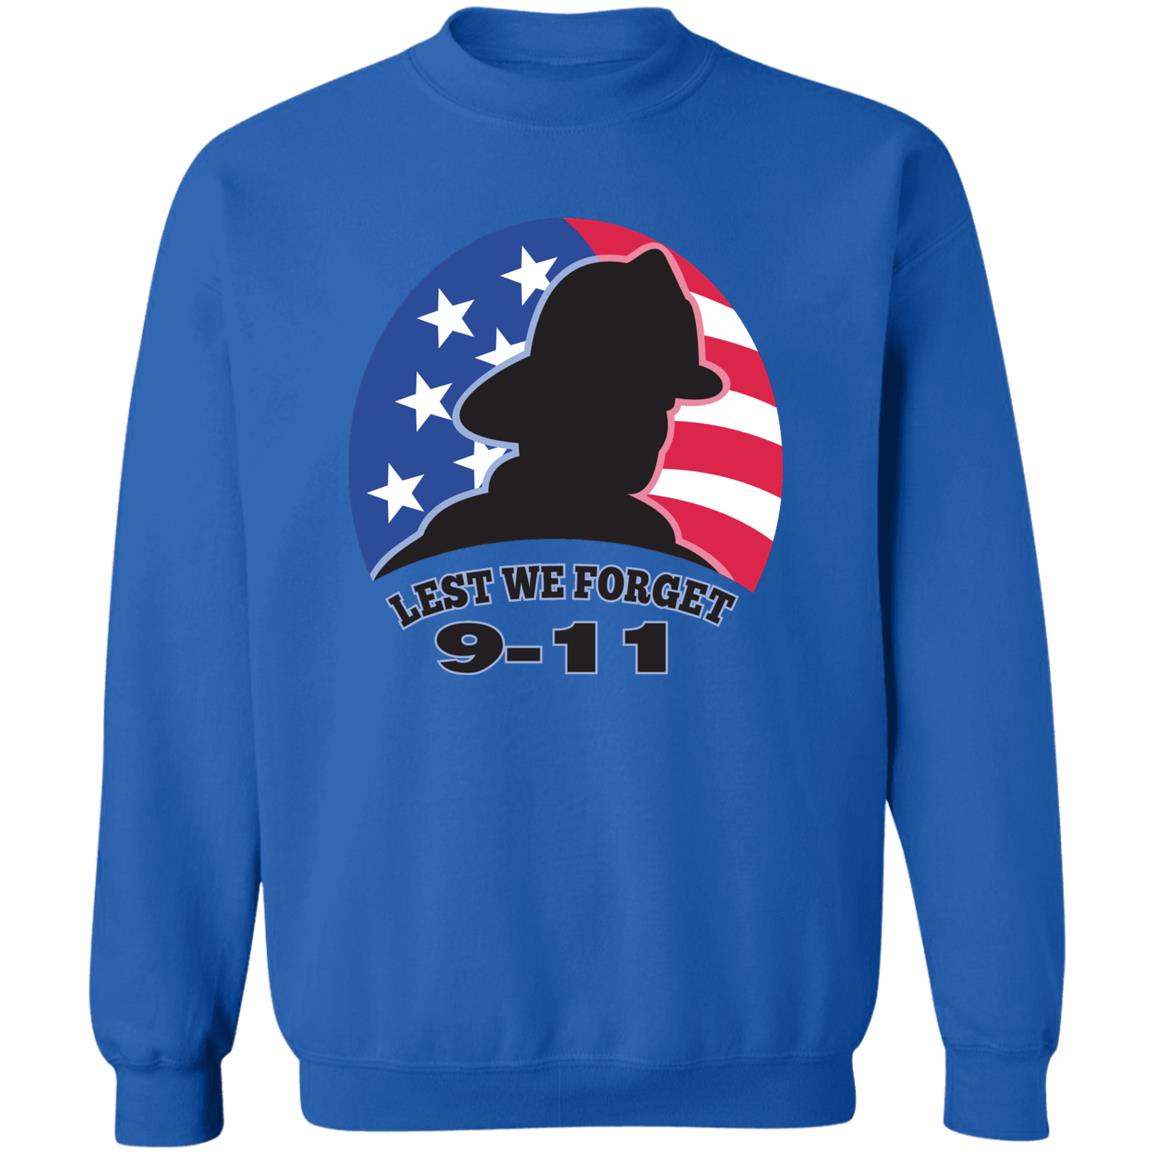 Never Forget (9)-Z65x Crewneck Pullover Sweatshirt